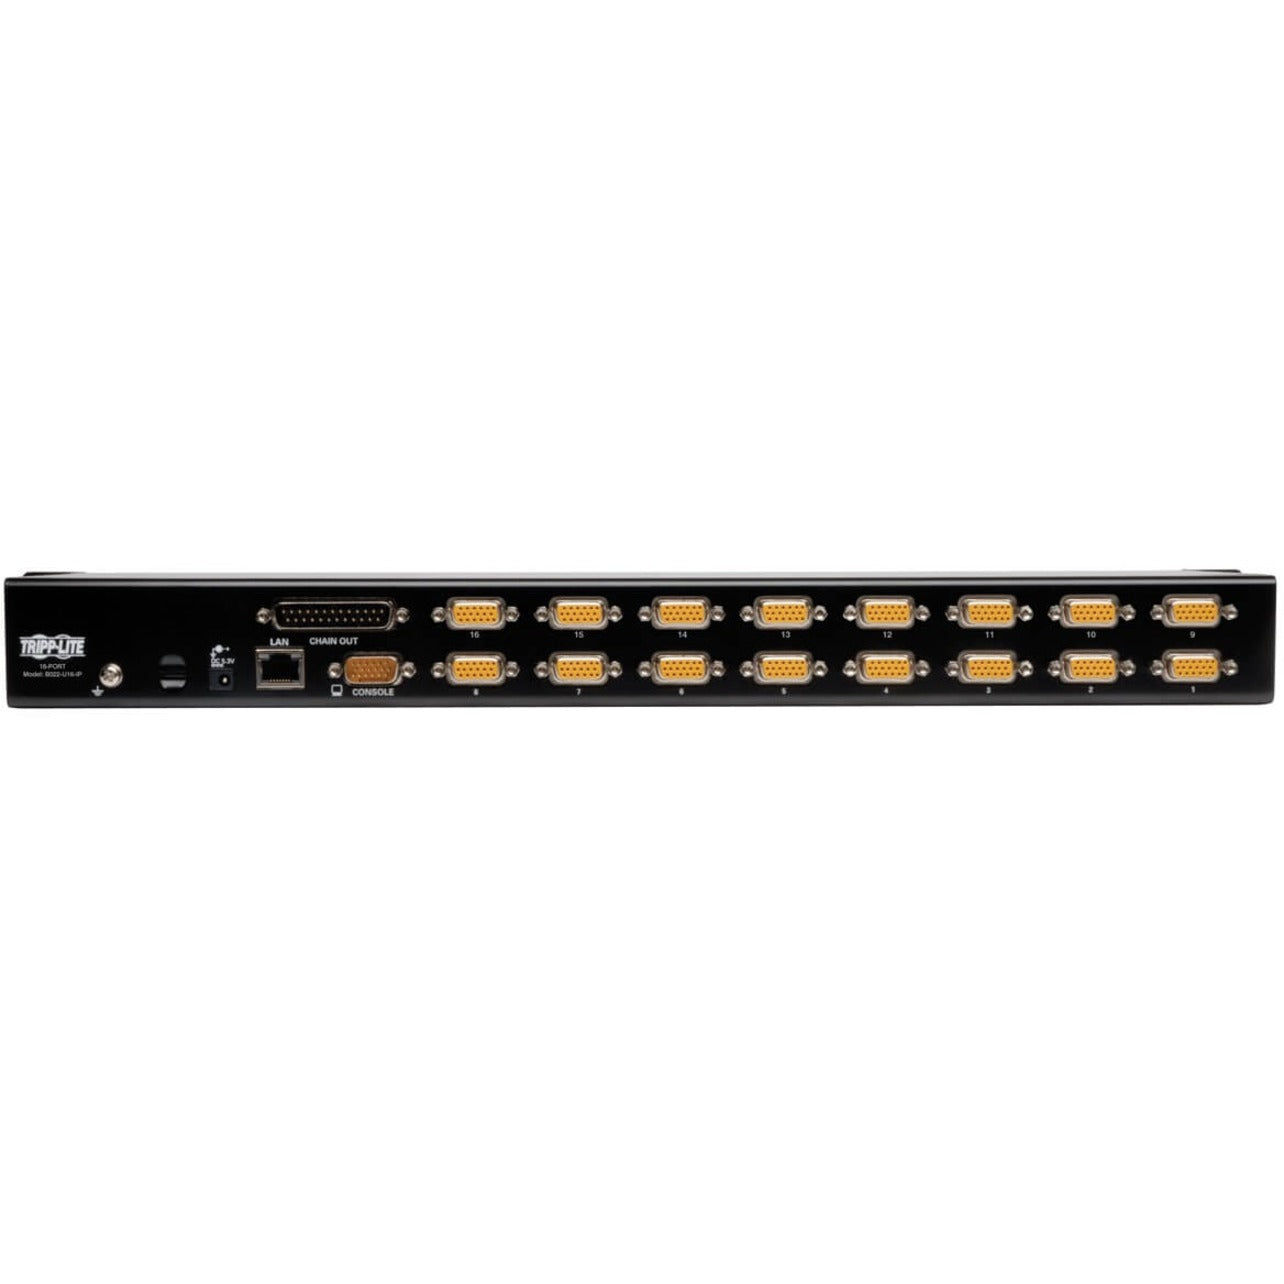 Tripp Lite B022-U16-IP NetDirector 16-Port 1U Rack-Mount IP KVM Switch, USB/PS2 Combo, 2048 x 1536 Resolution, 3 Year Warranty